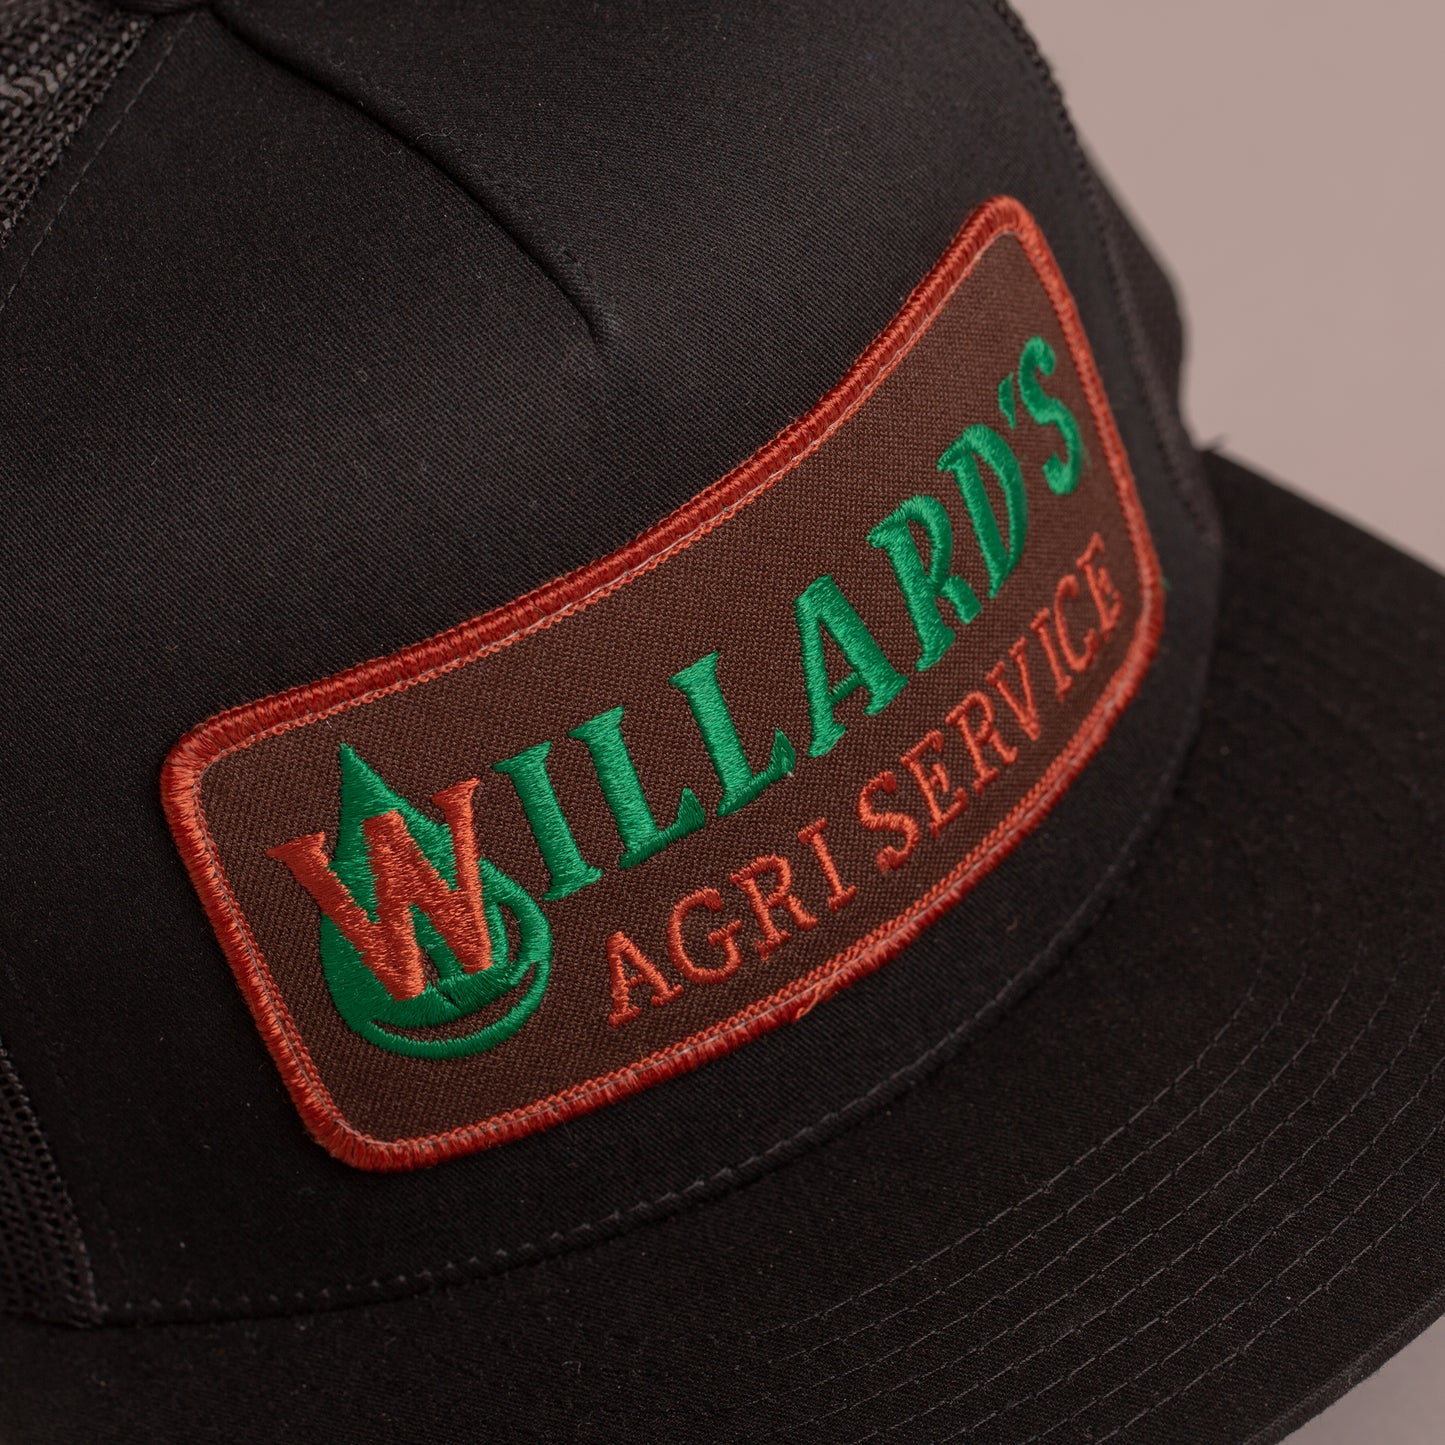 Willard's Agri Service